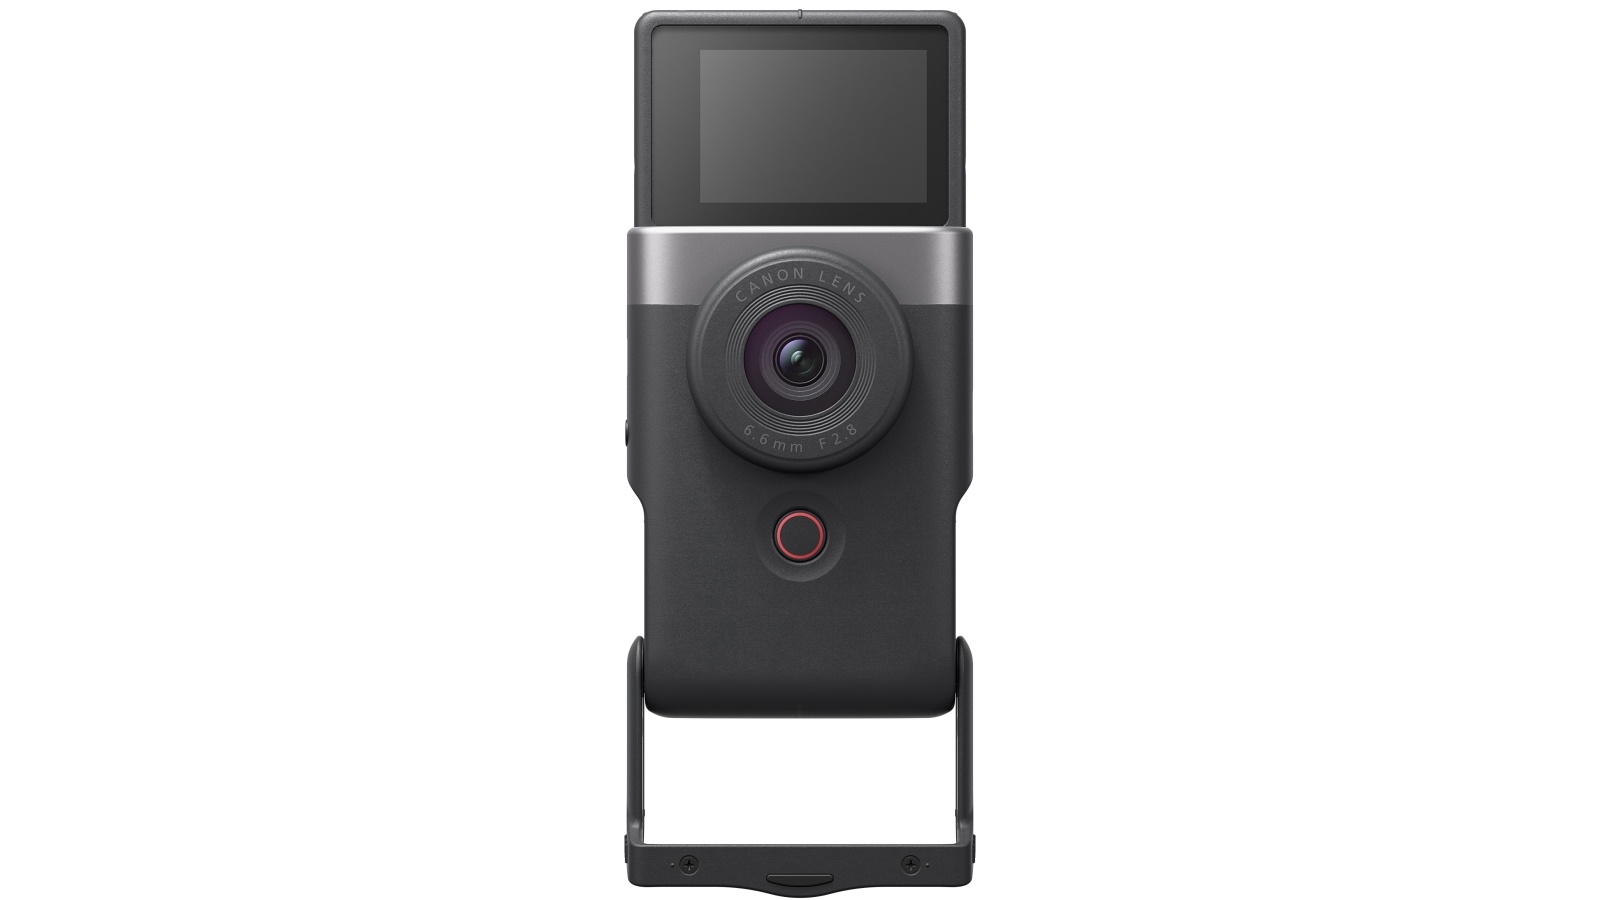 Canon PowerShot V10 Advanced Vlogging Kit black - Foto Erhardt